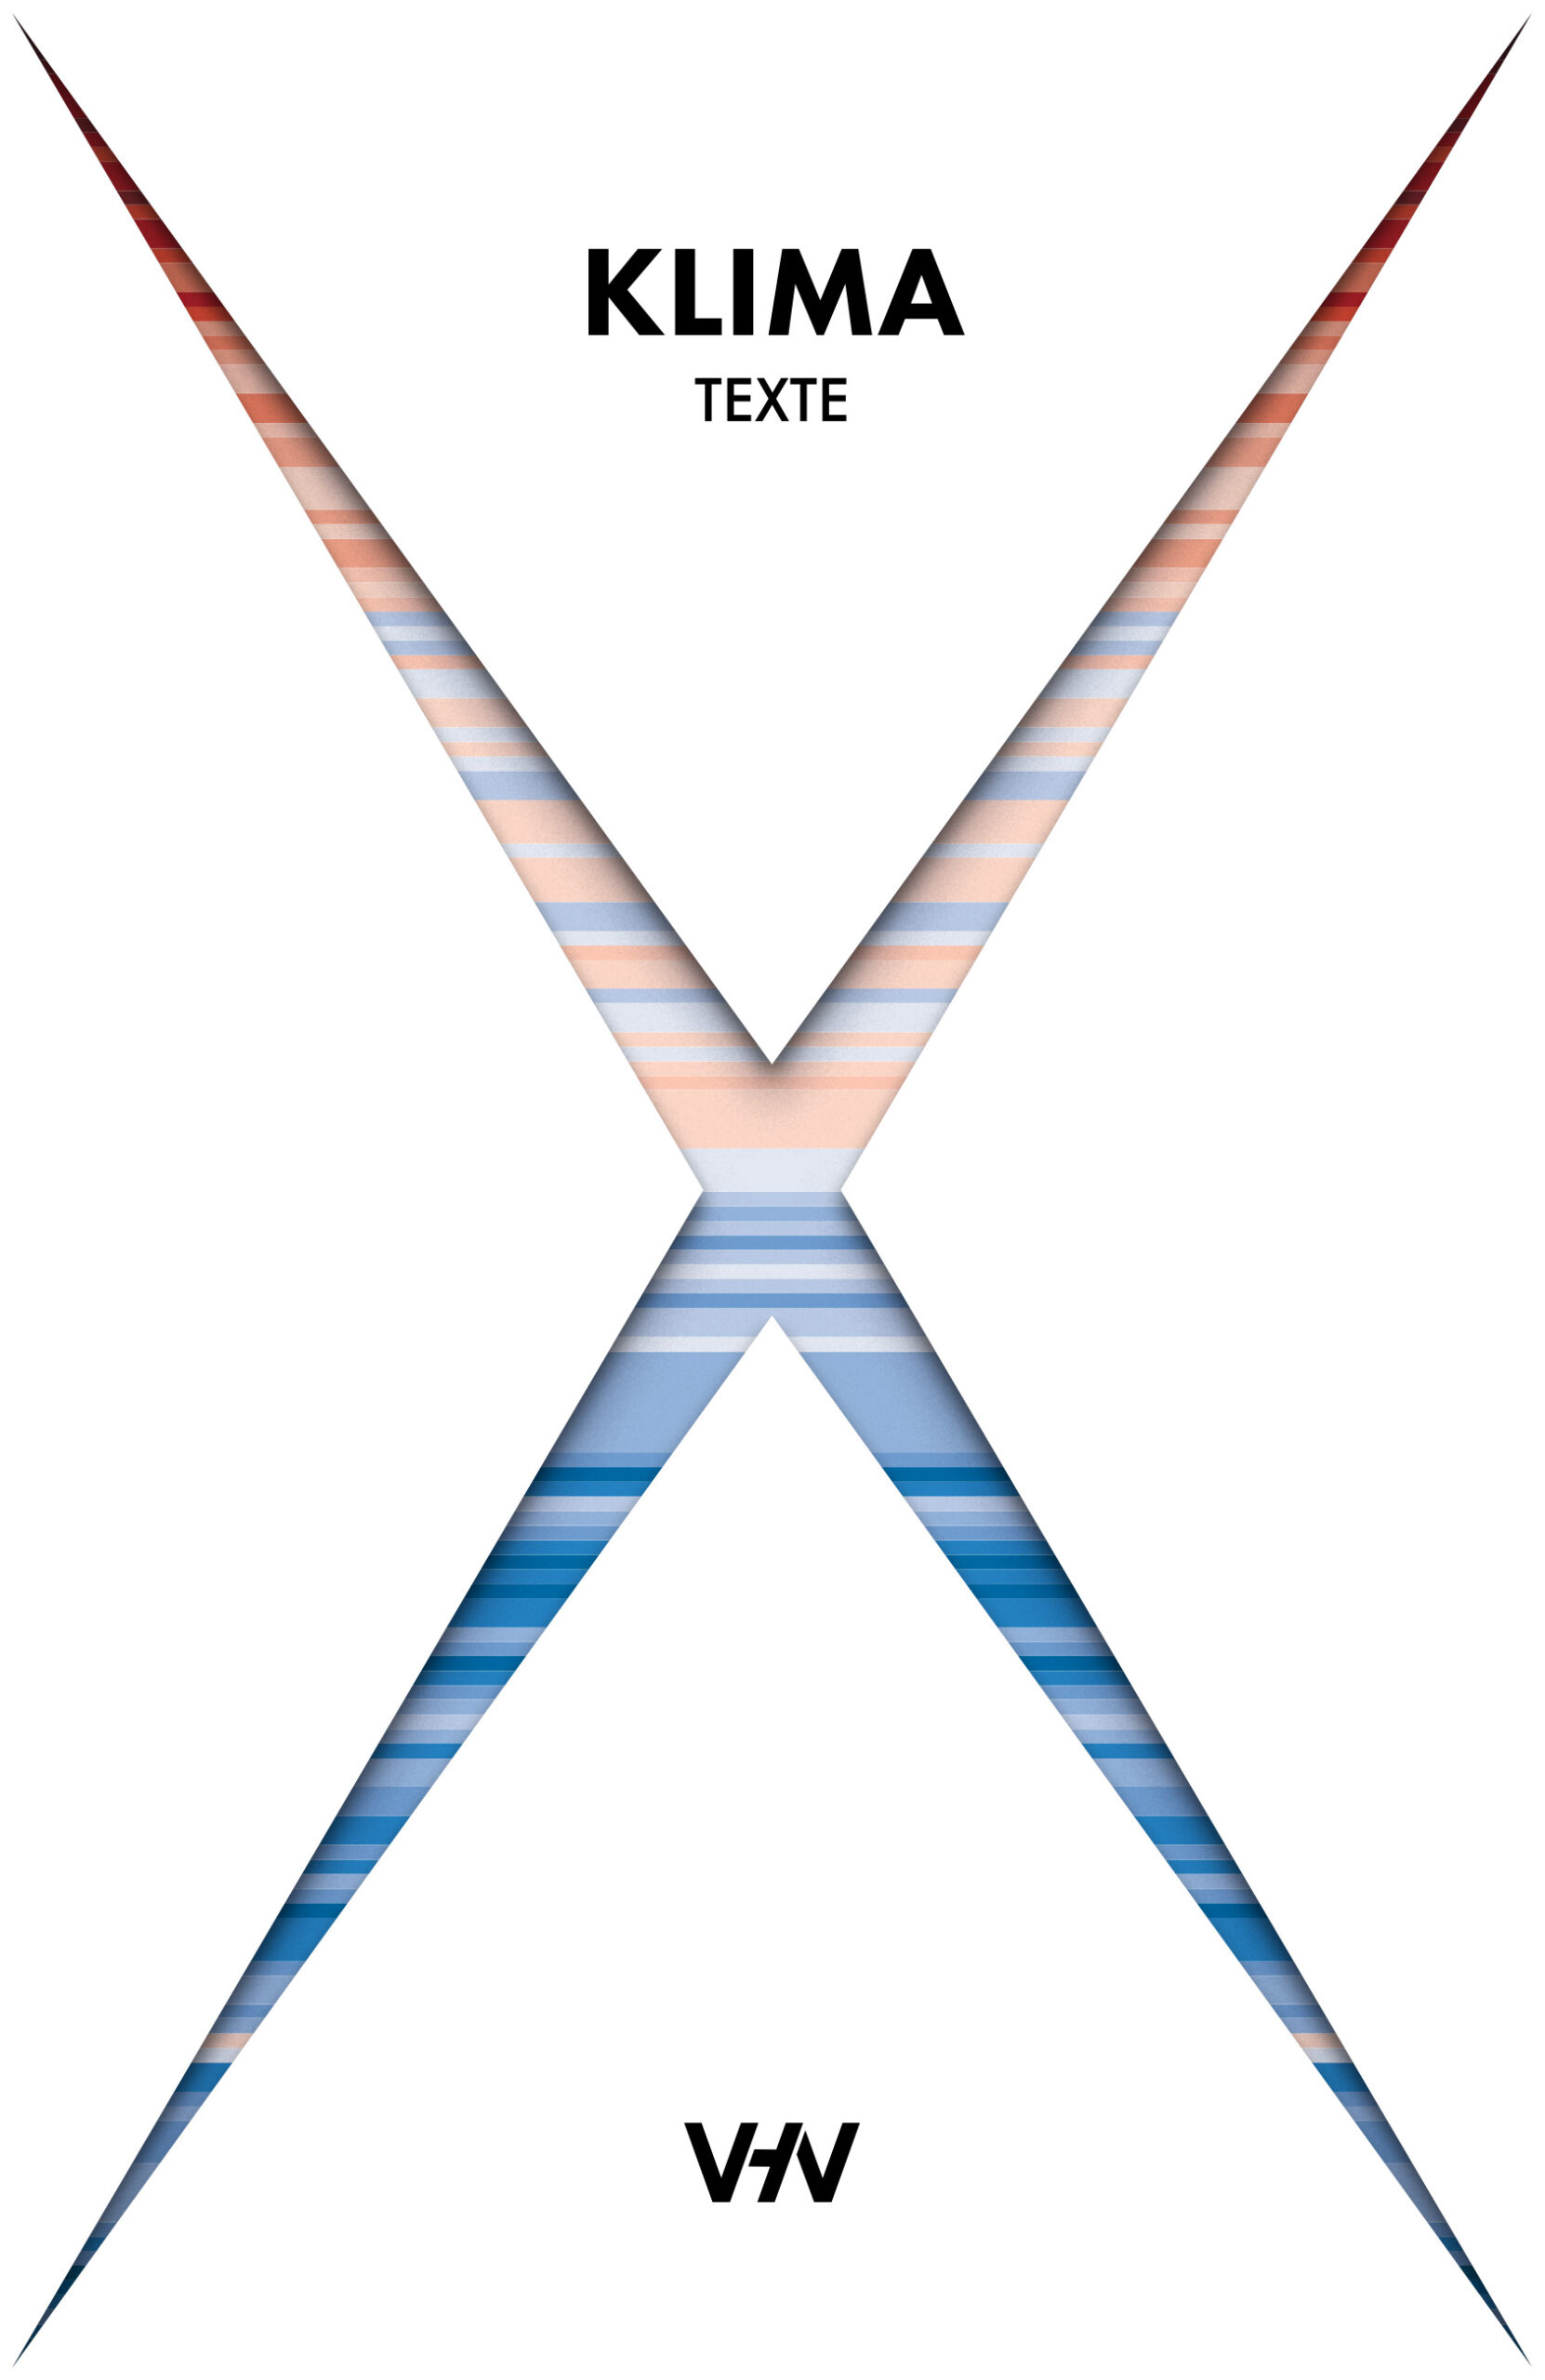 X-Klimatexte